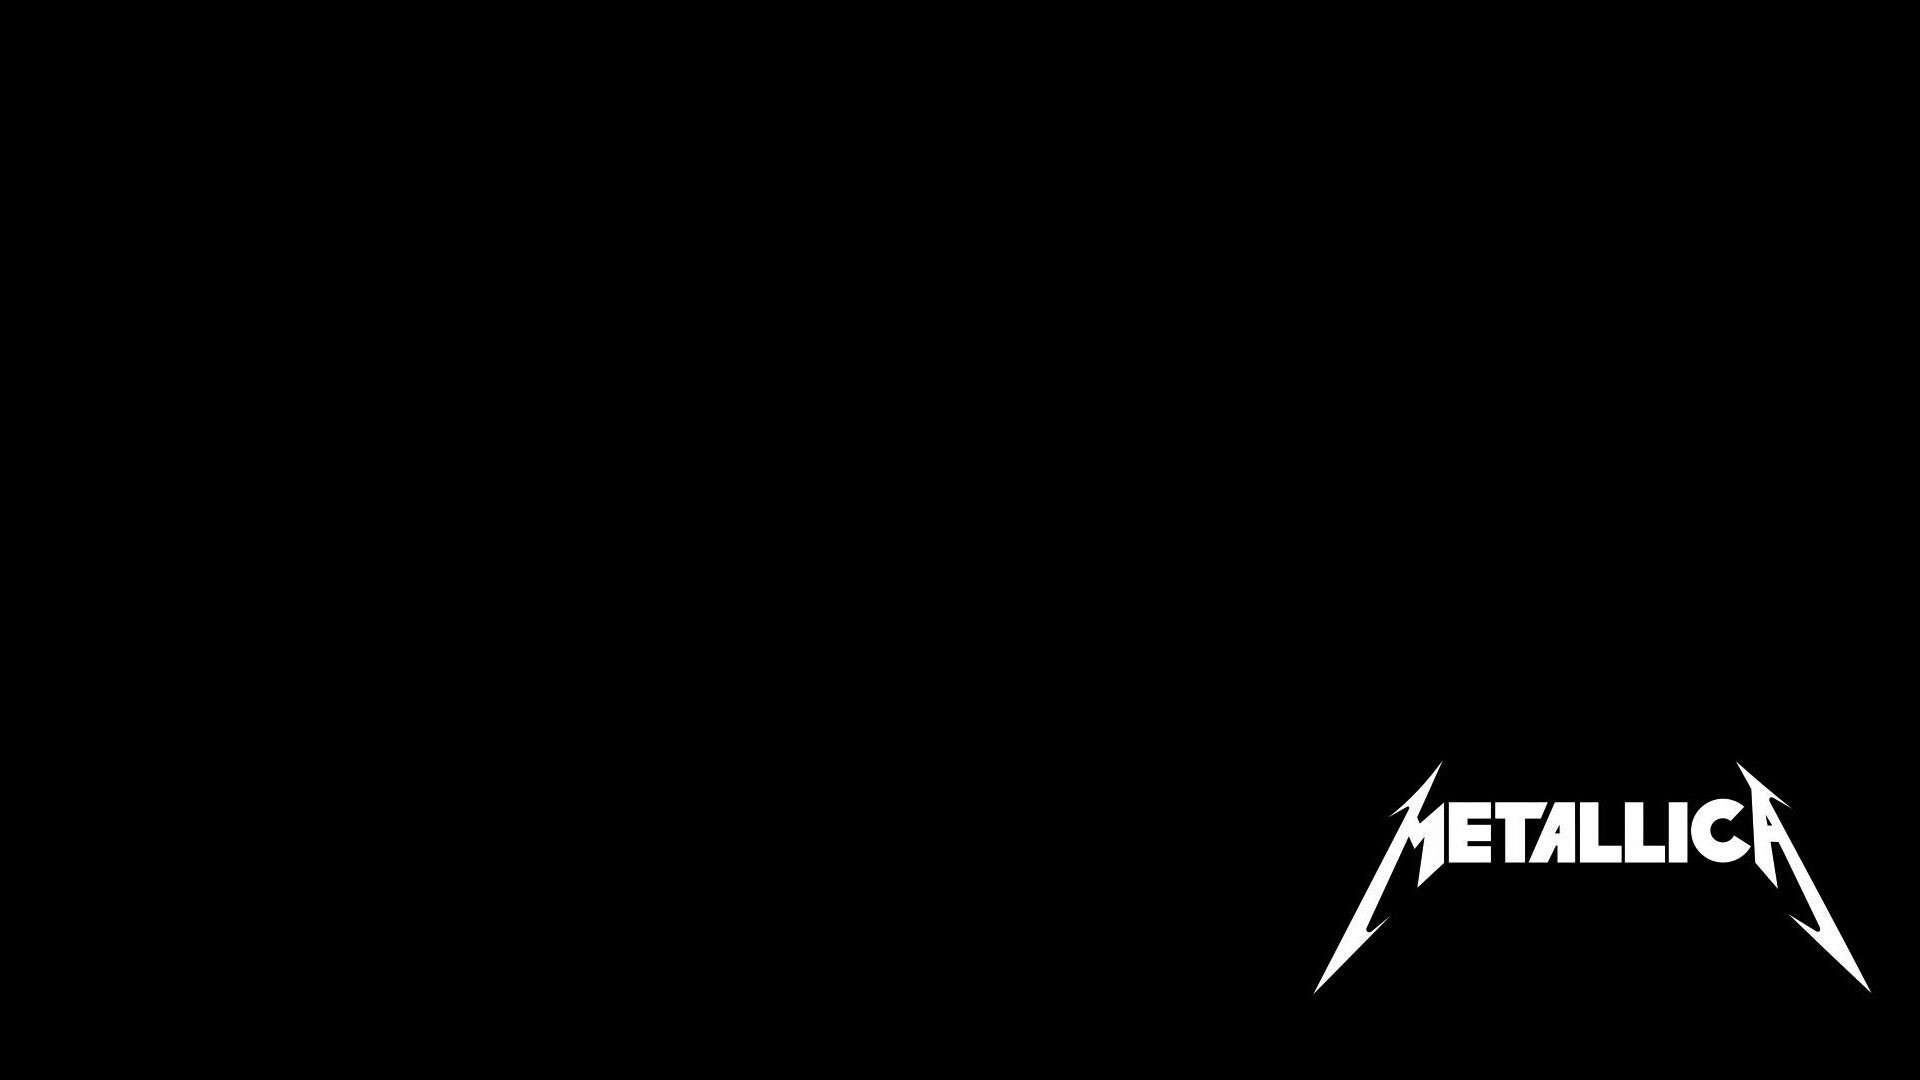 1920x1080 Metallica HD Background - Pitch Black by rohynrajesh